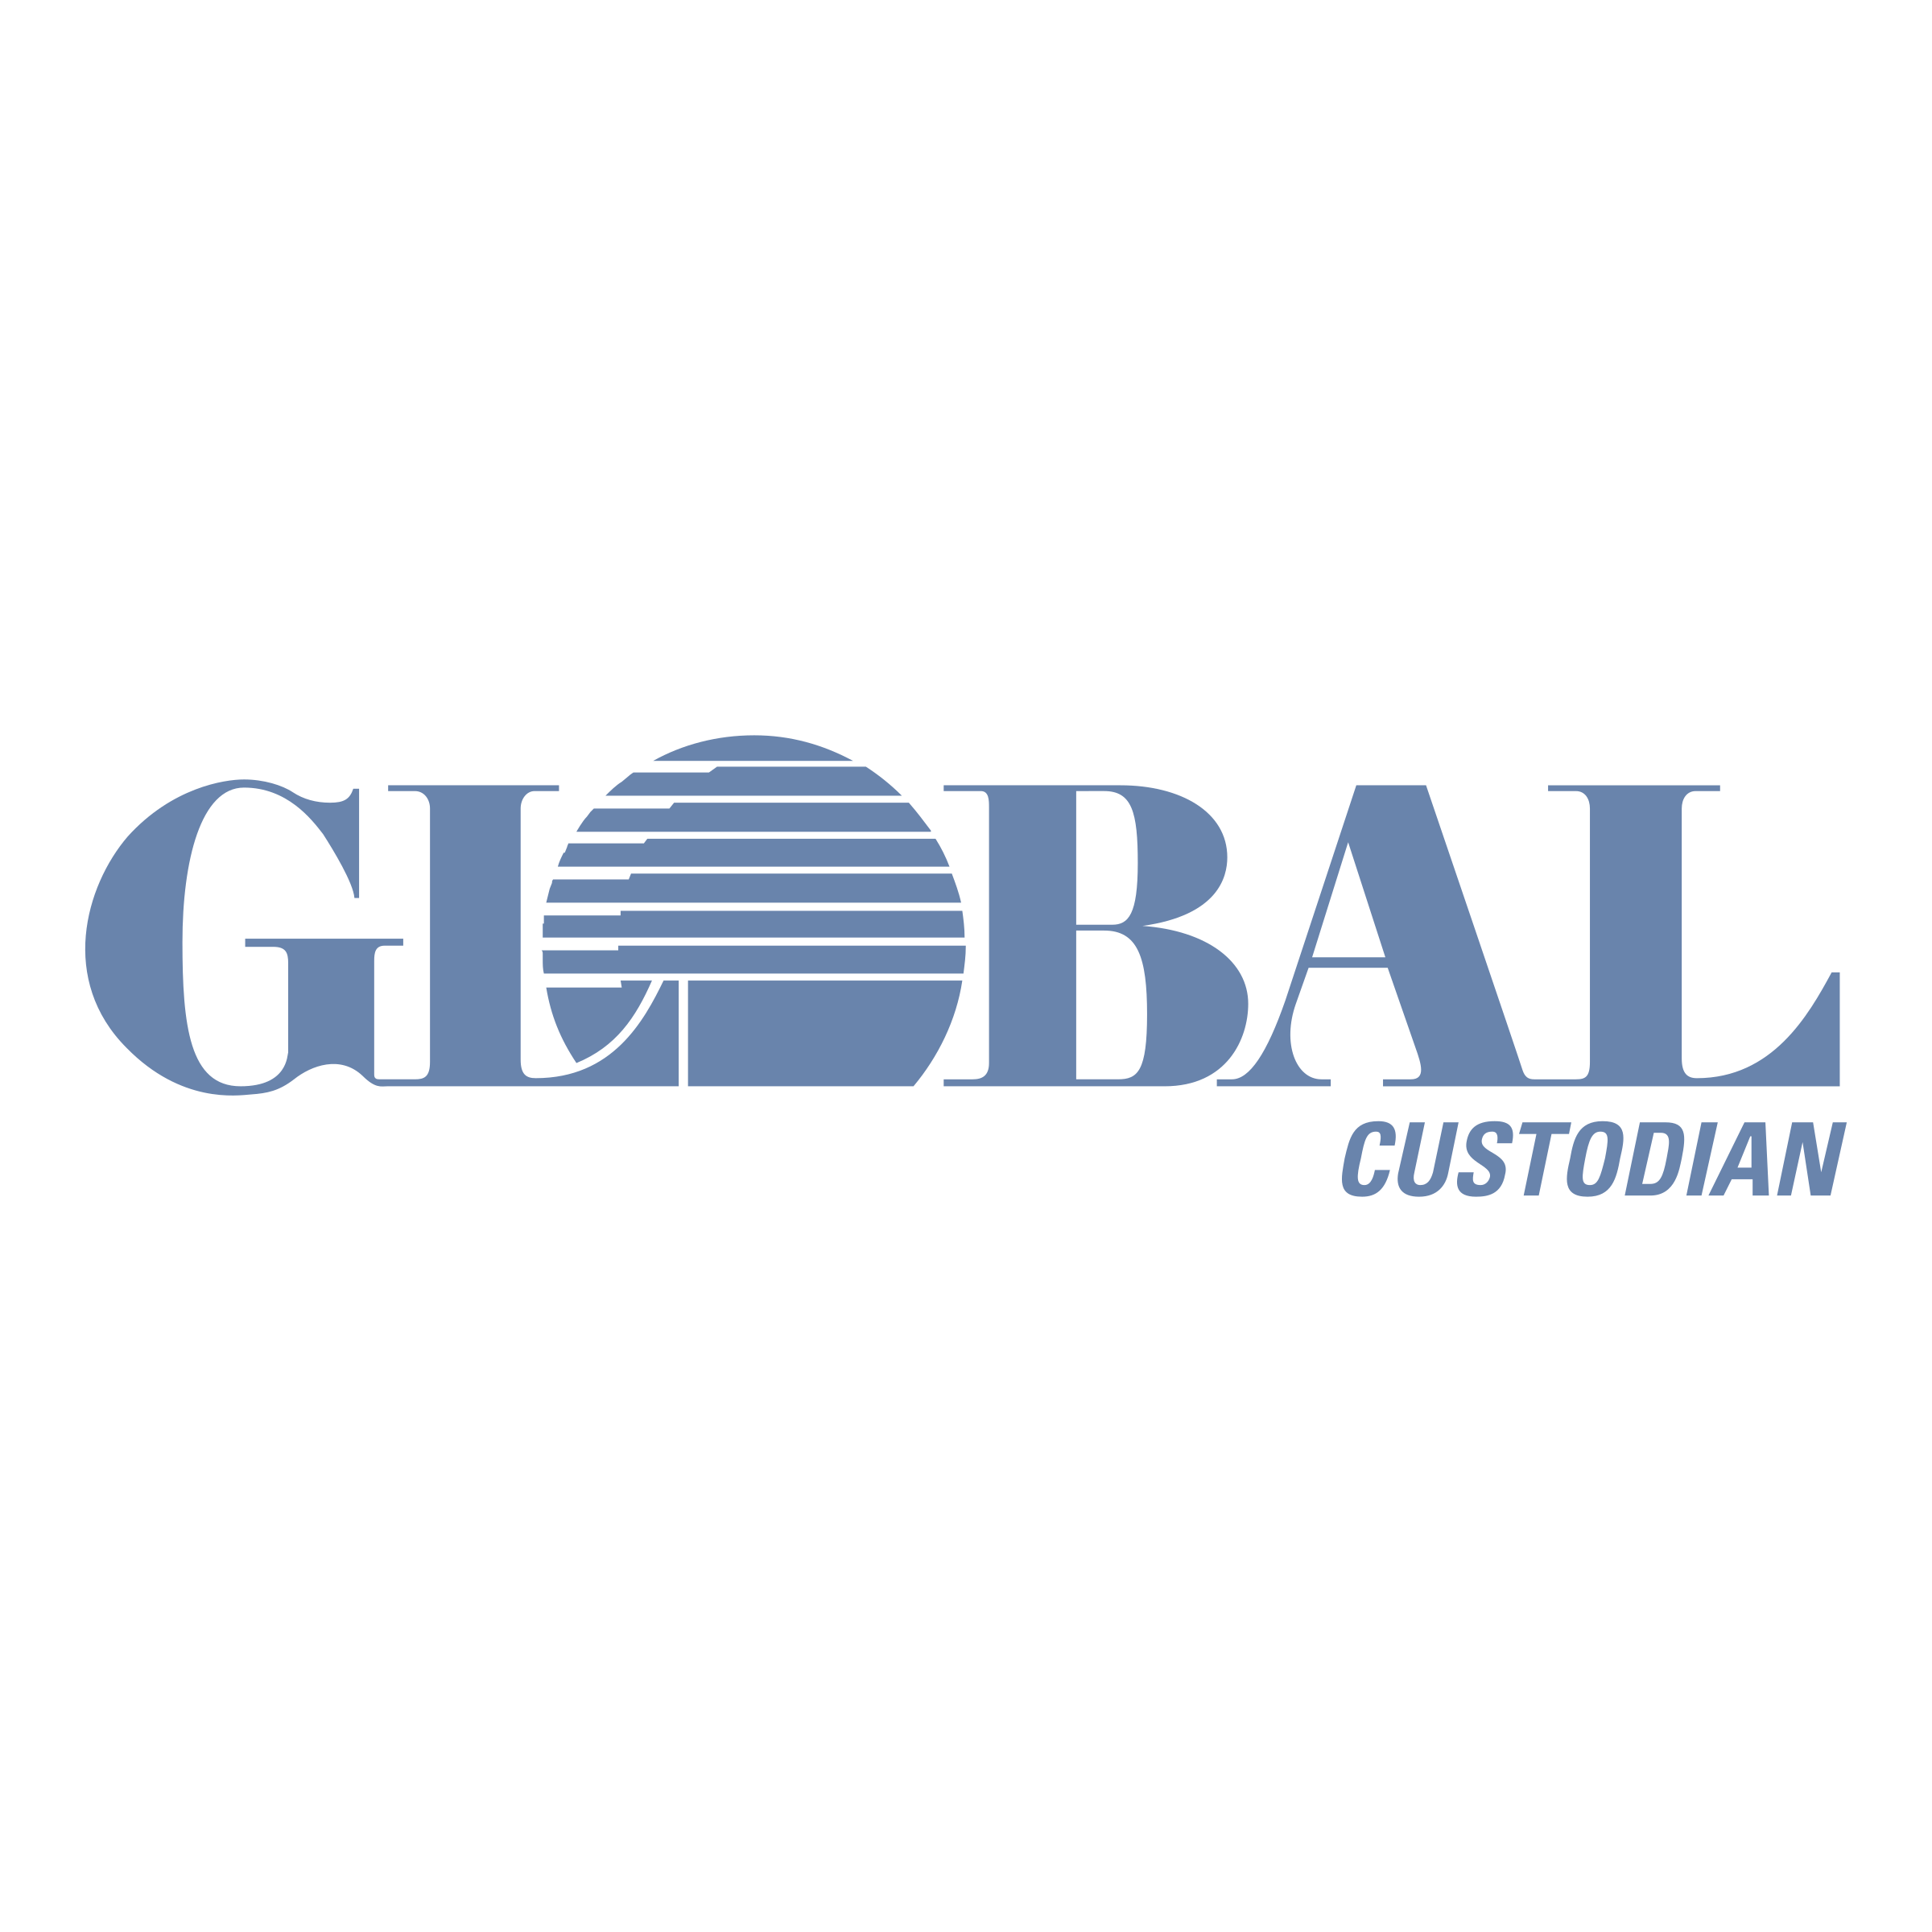 Custodian Logo - Global Custodian Logo PNG Transparent & SVG Vector